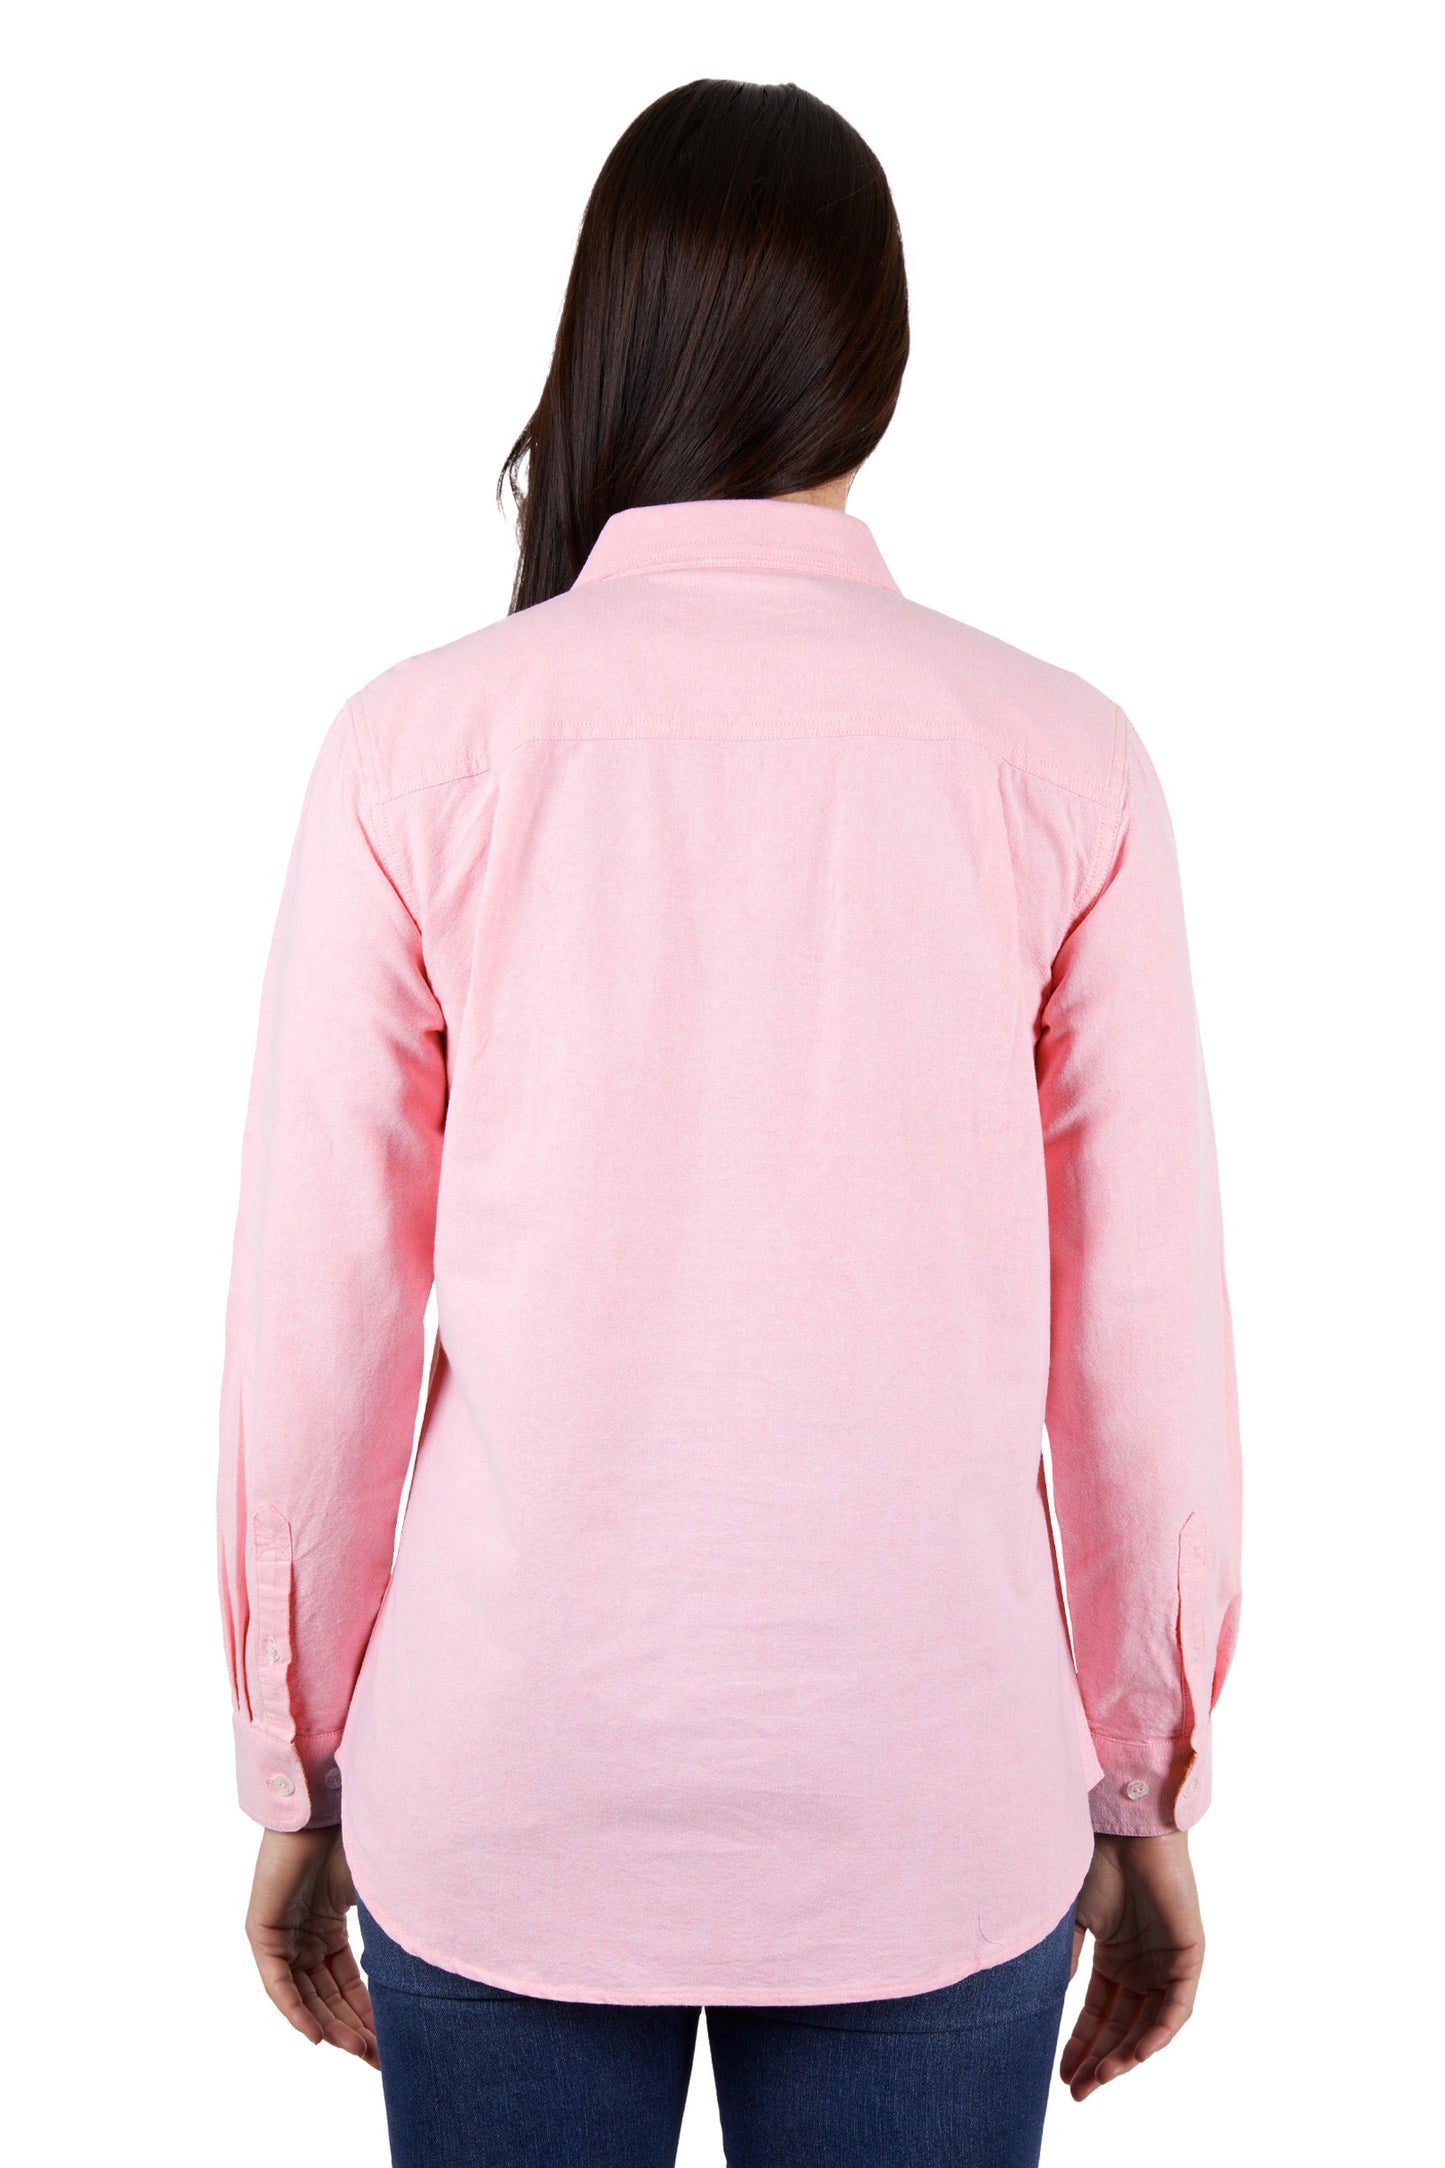 Hard Slog Ladies Jas Half Placket L/S Shirt - Pink - H4W2101209